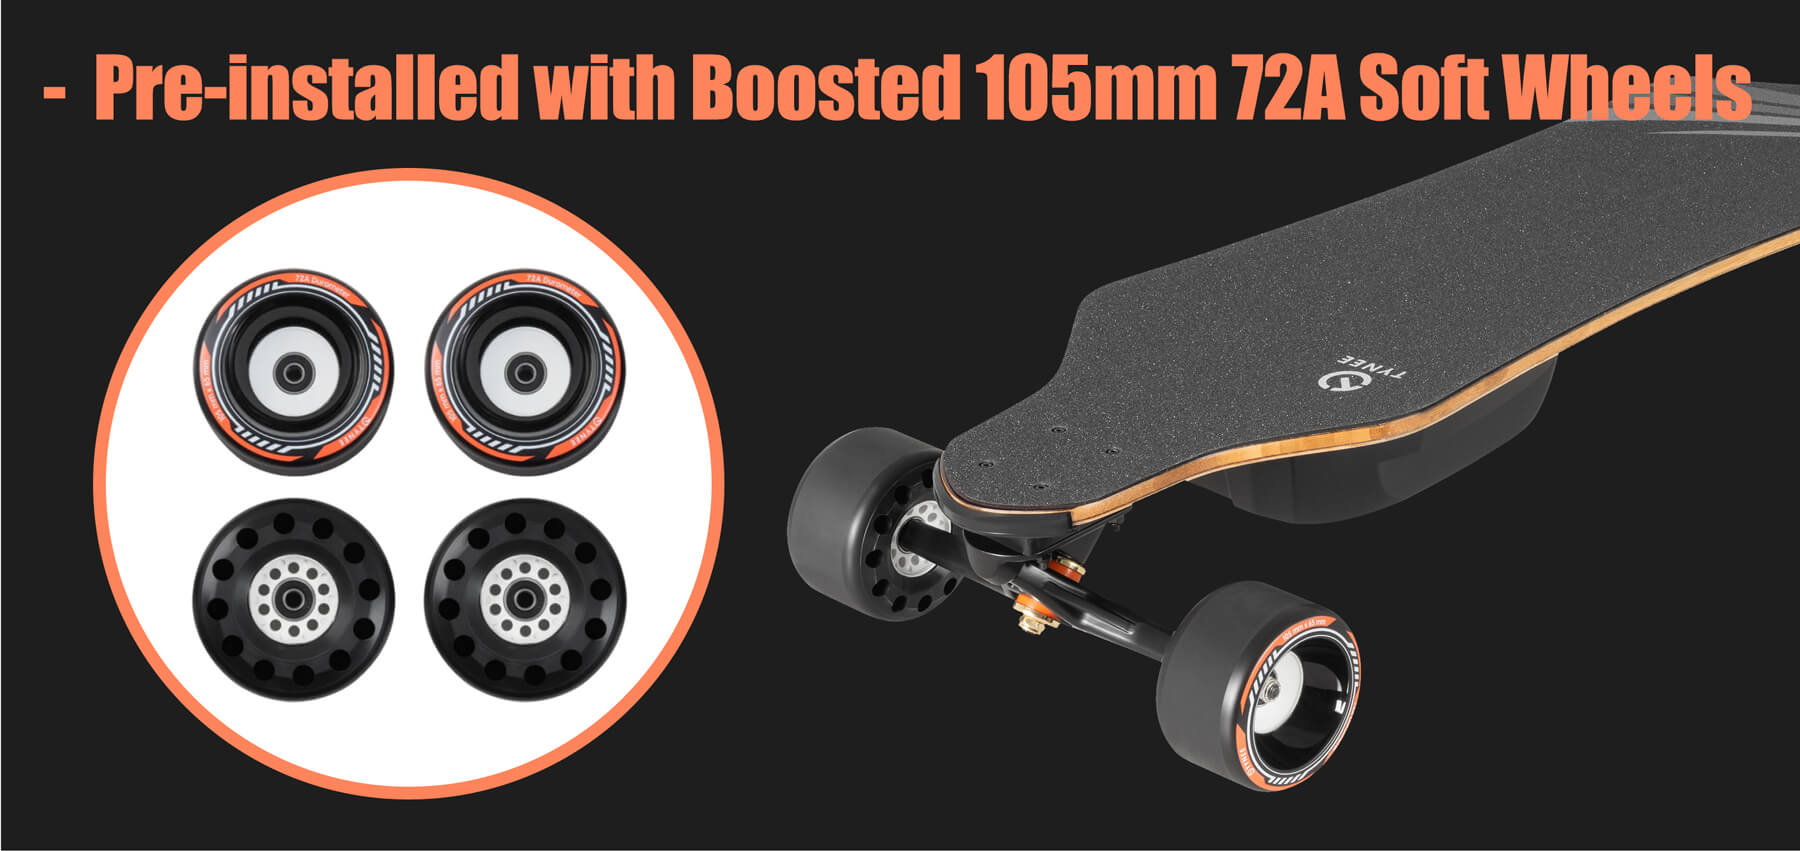 Tynee ultra x pro electric skateboard boosted 105 soft wheels